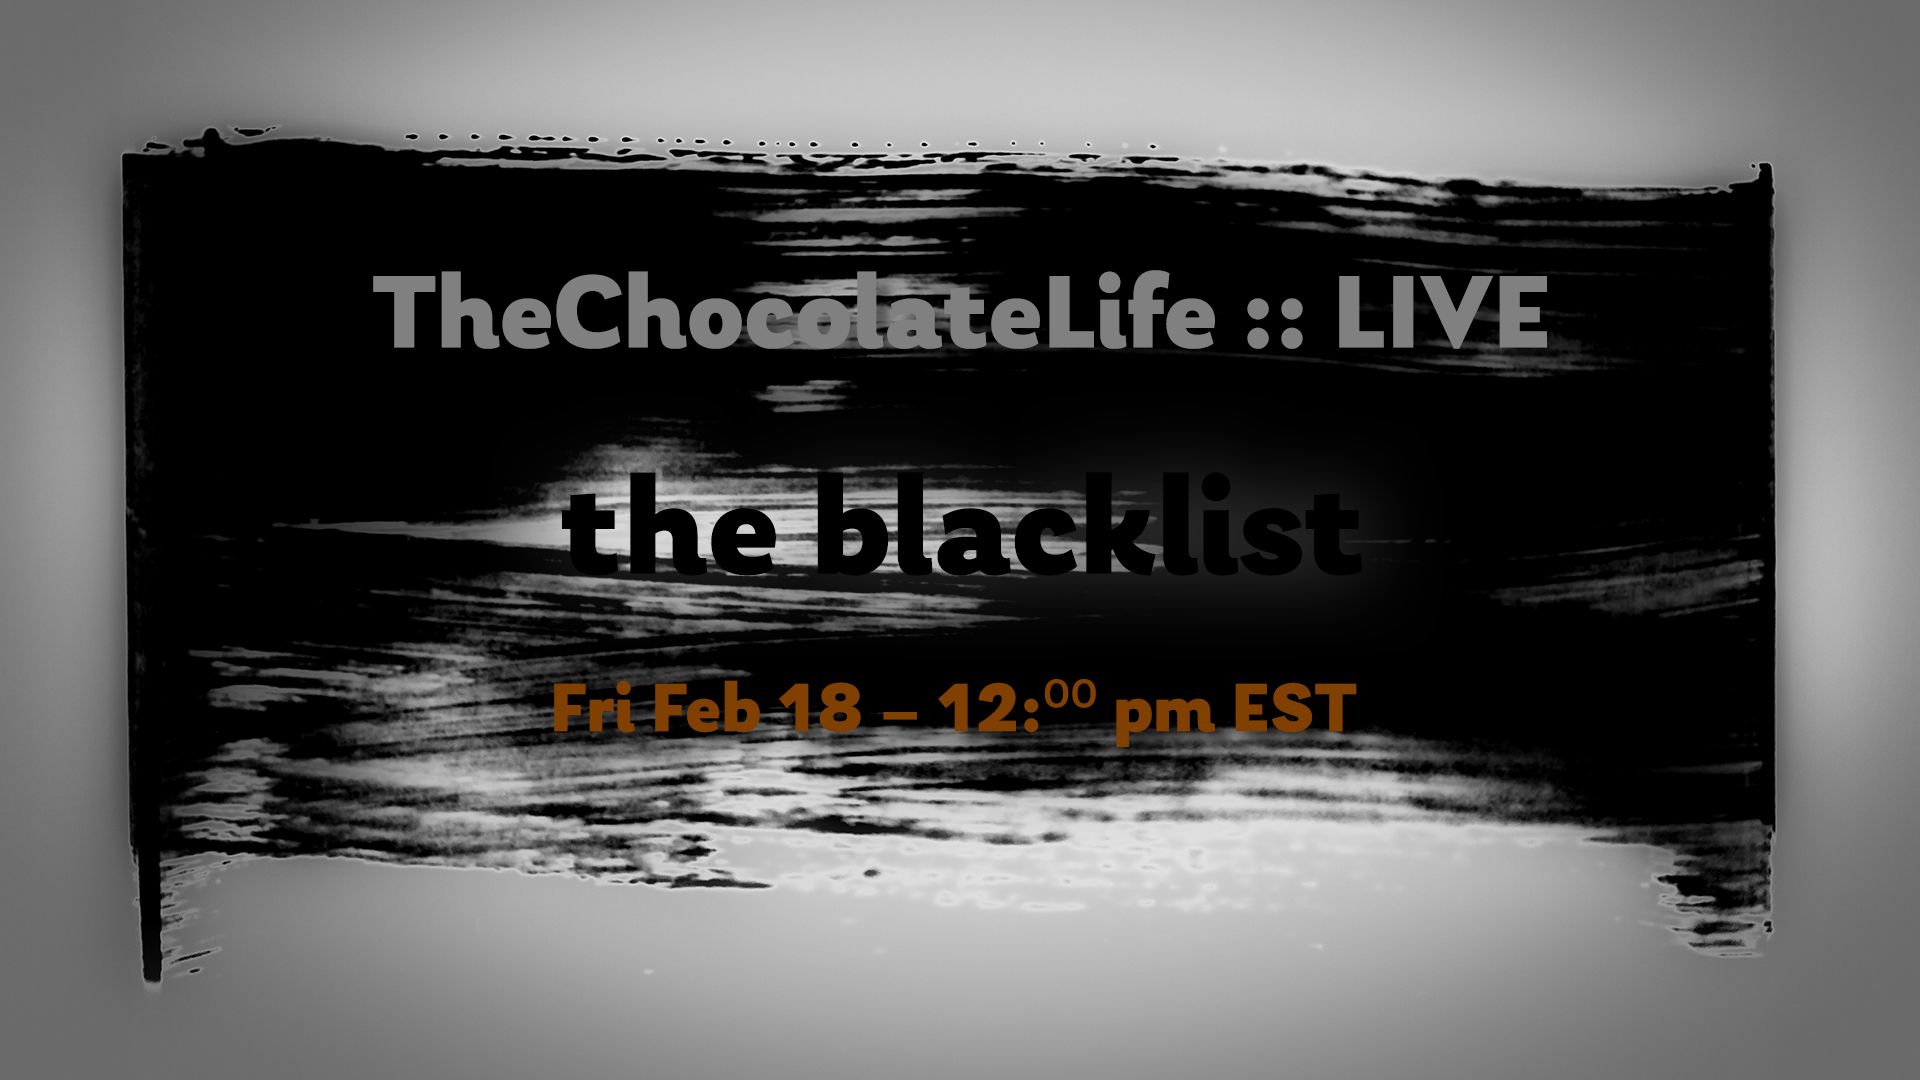 TheChocolateLife :: LIVE – the blacklist